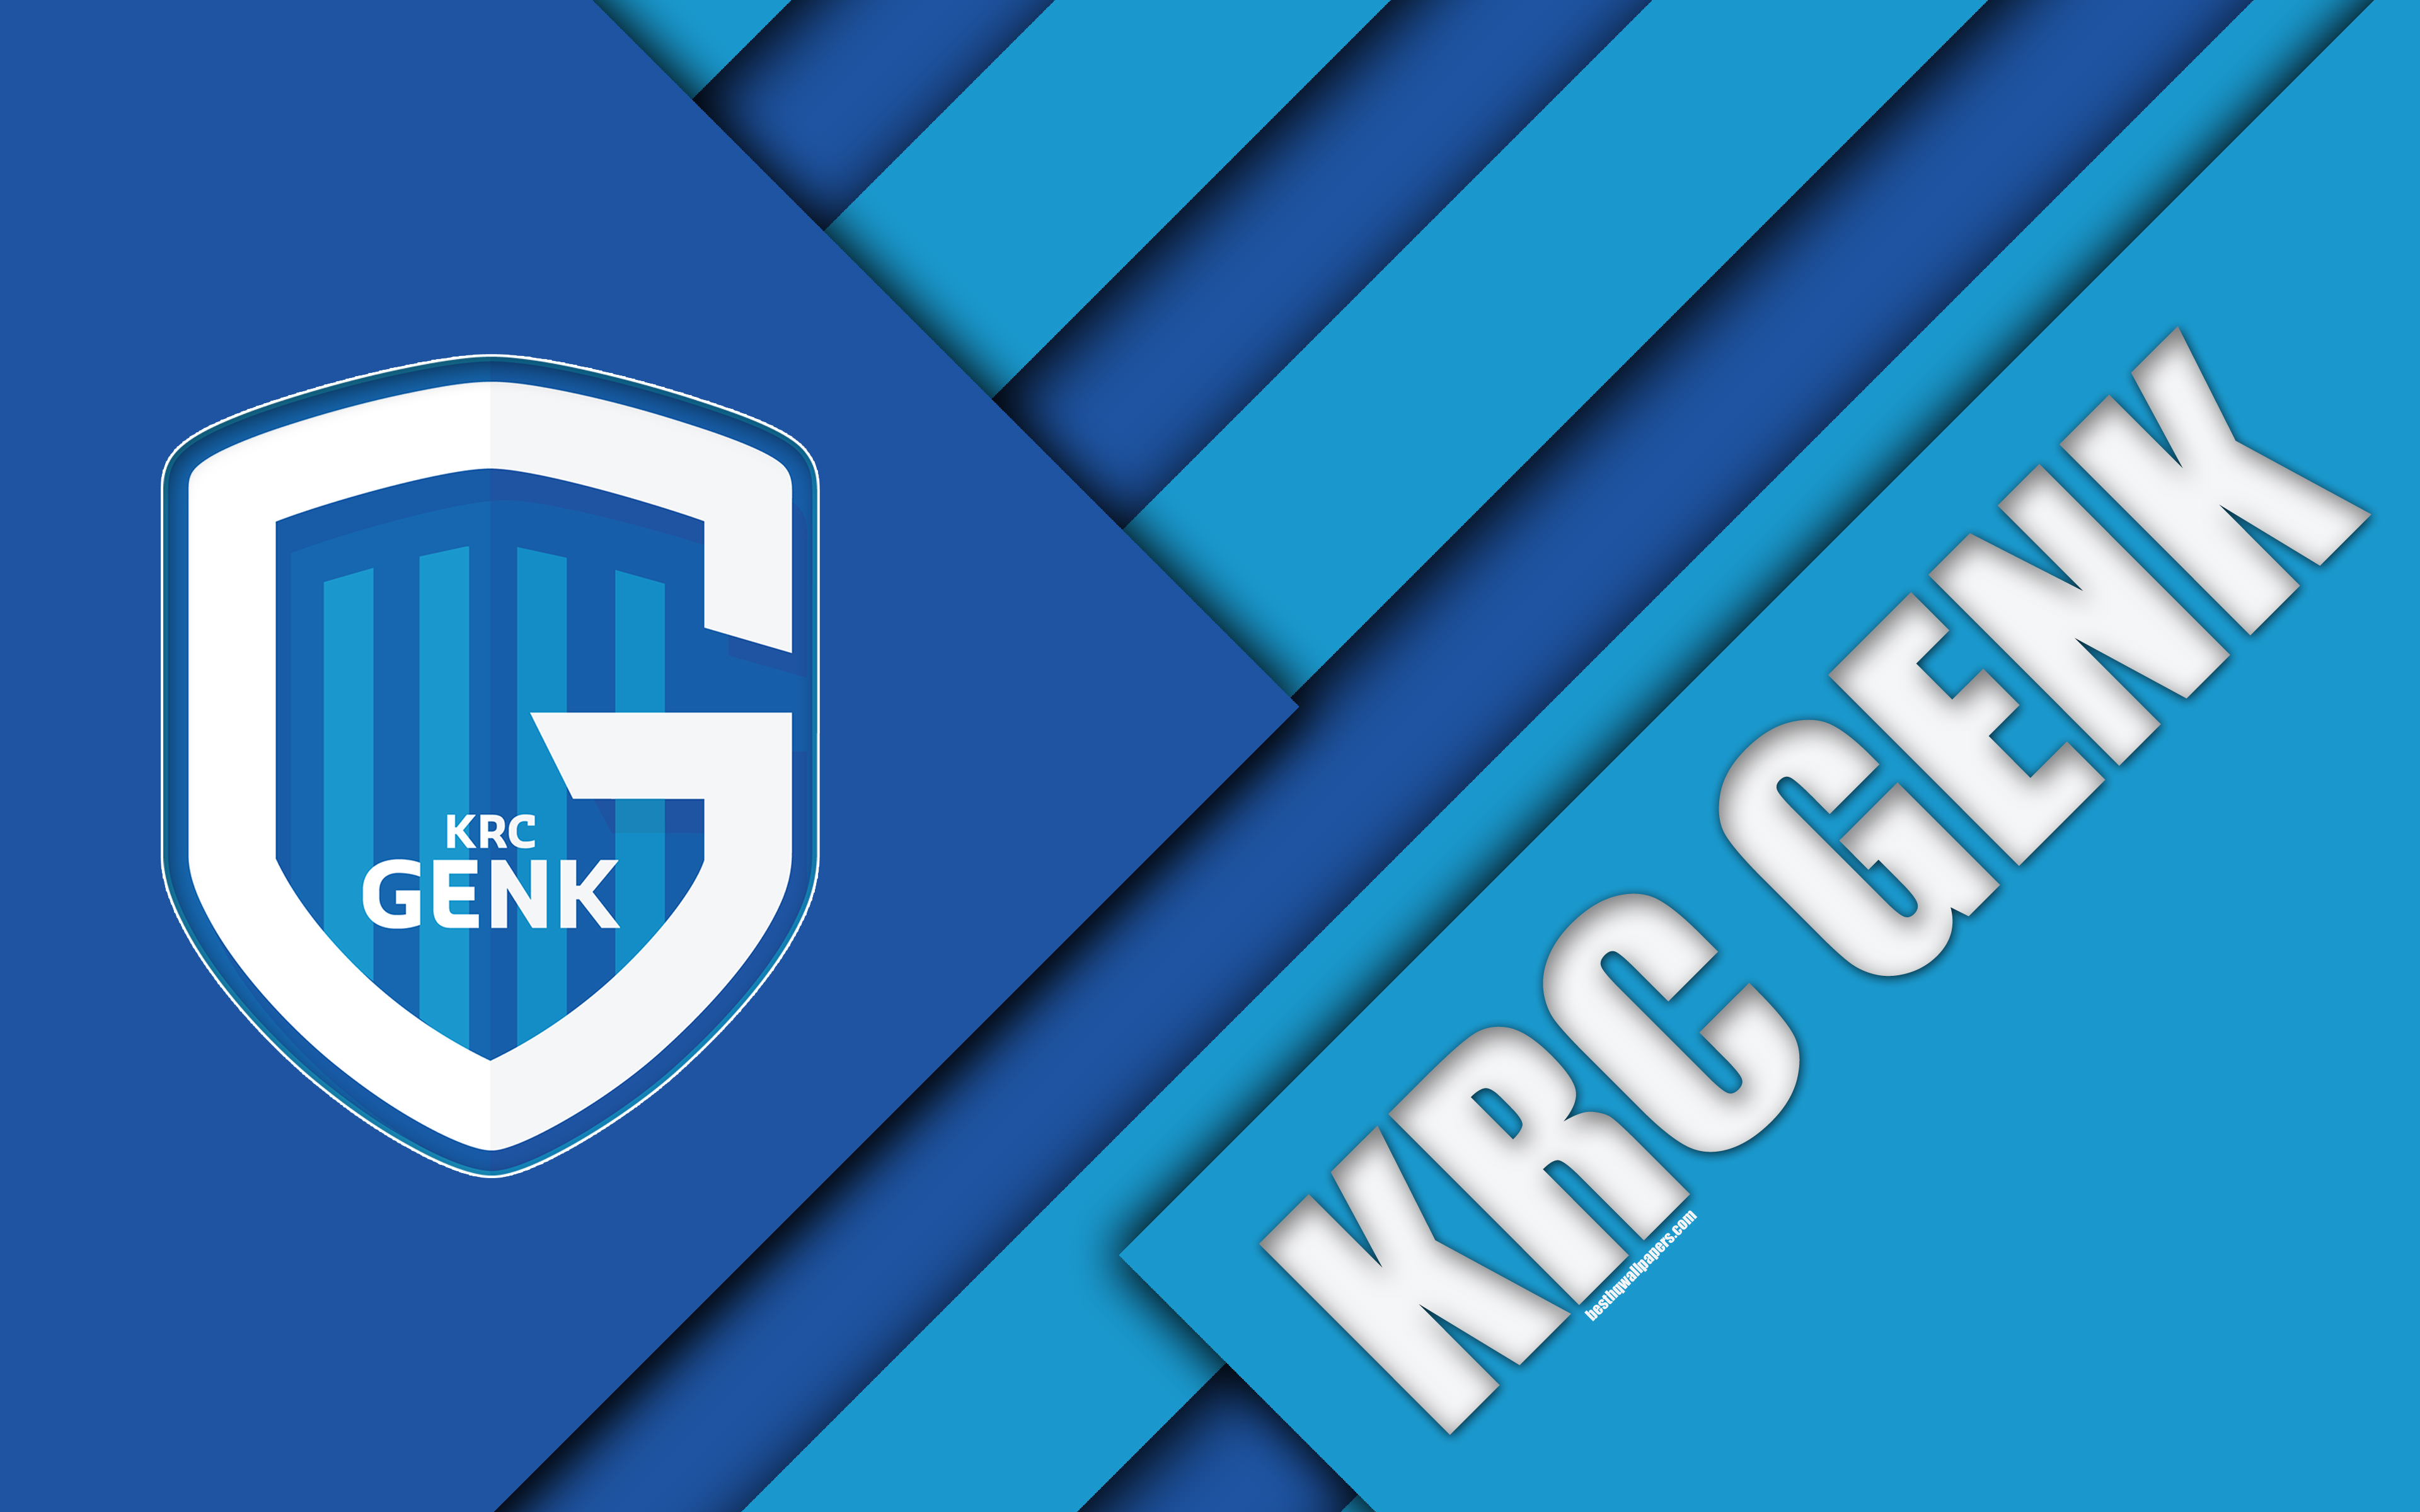 Download wallpaper KRC GENK, 4k, Belgian football club, blue